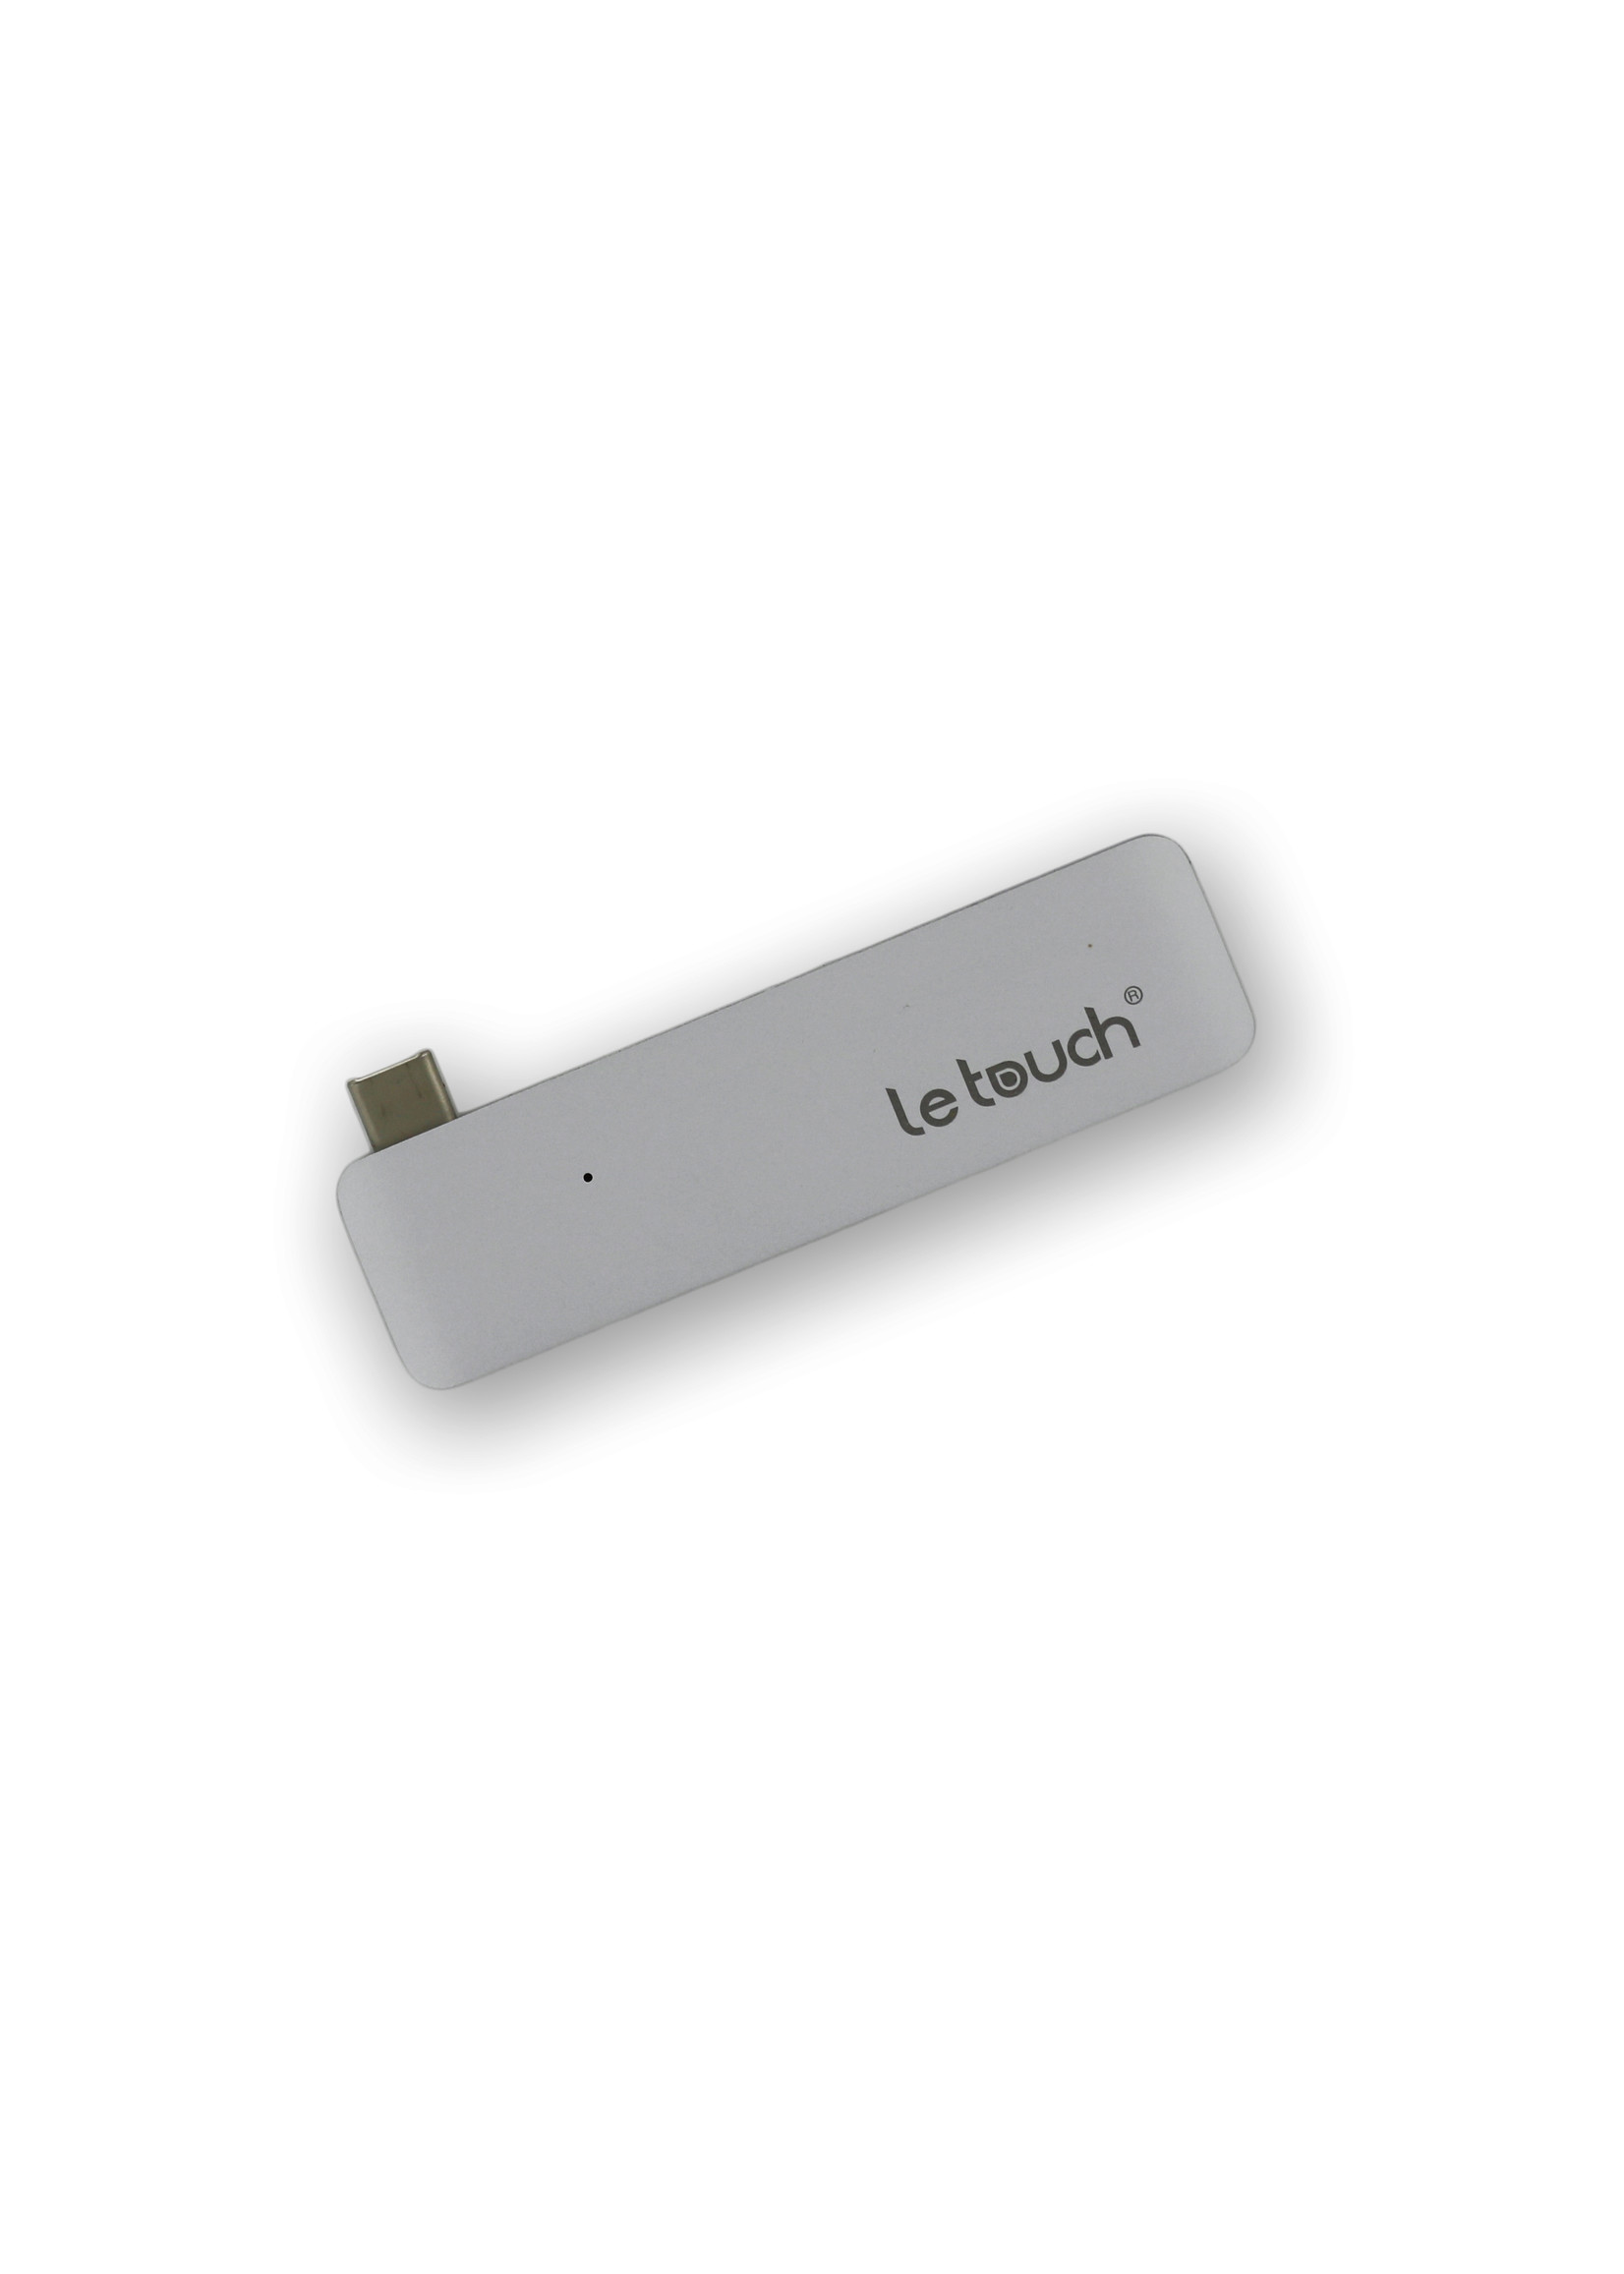 USB-C Hub with 3x USB-A port and card reader